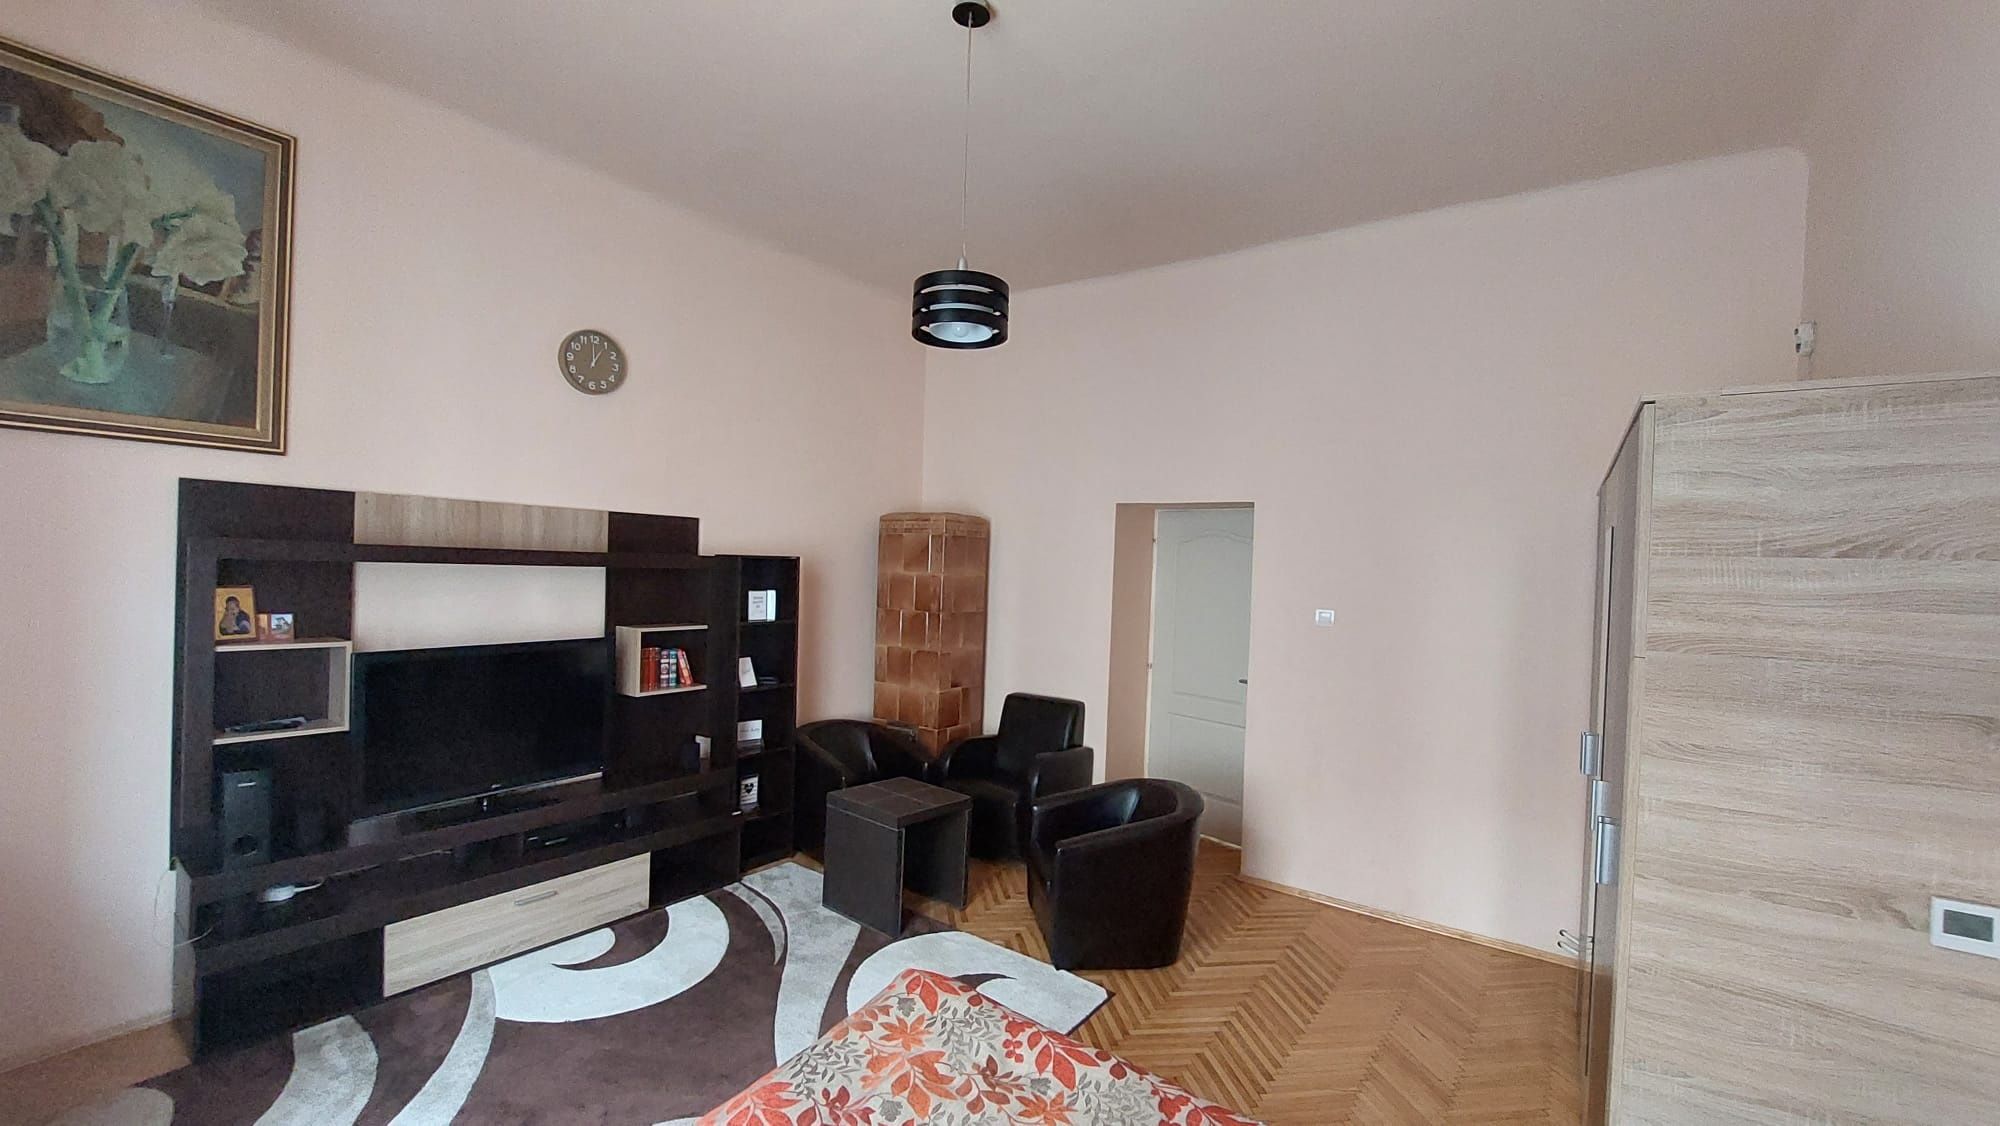 Apartament și garaj, Horea, Cluj-Napoca de vanzare